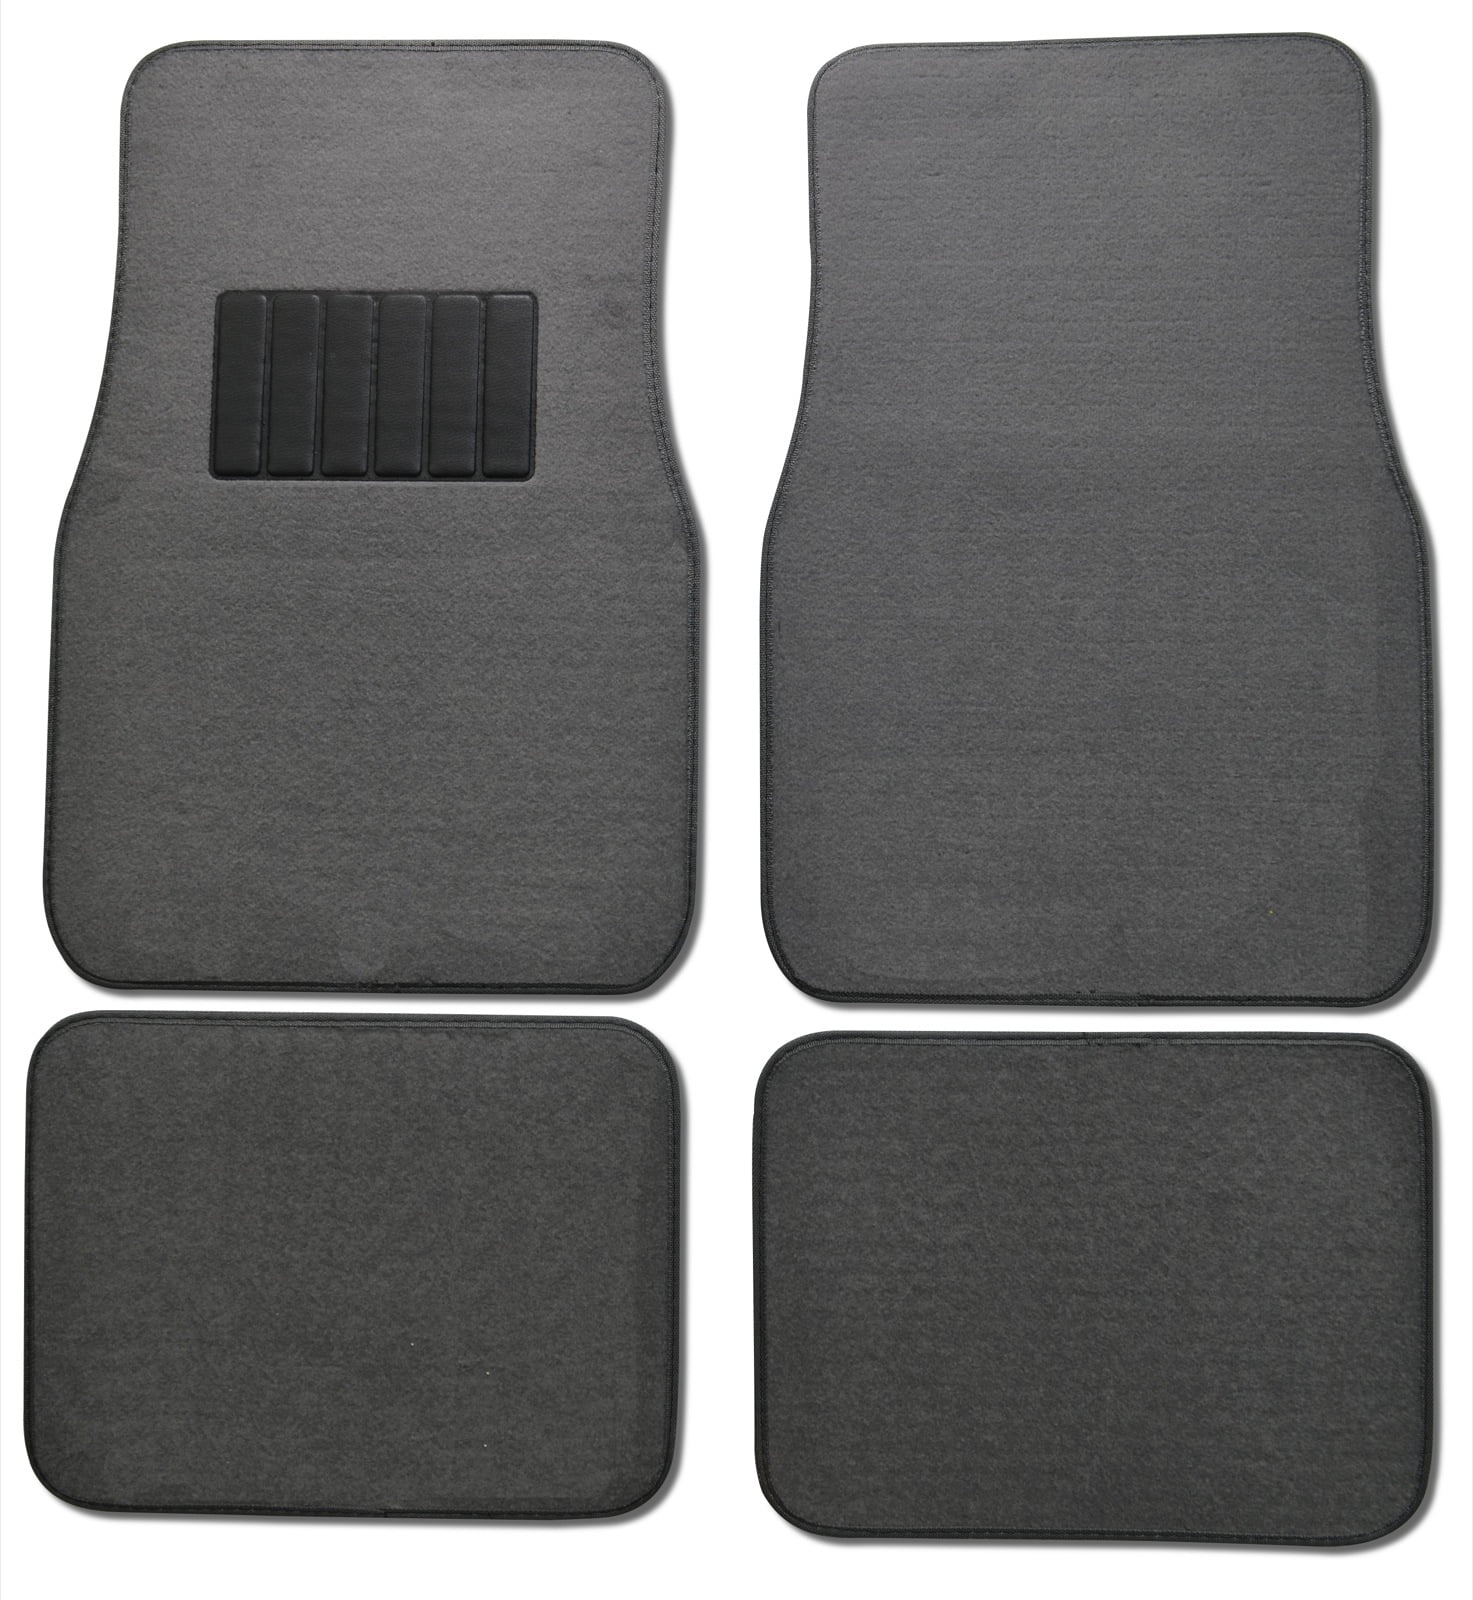 BDK Car Floor Mats 4 Pieces Carpet Protection - Universal Fit for Car, SUV,  VA & Truck, Front & Rear